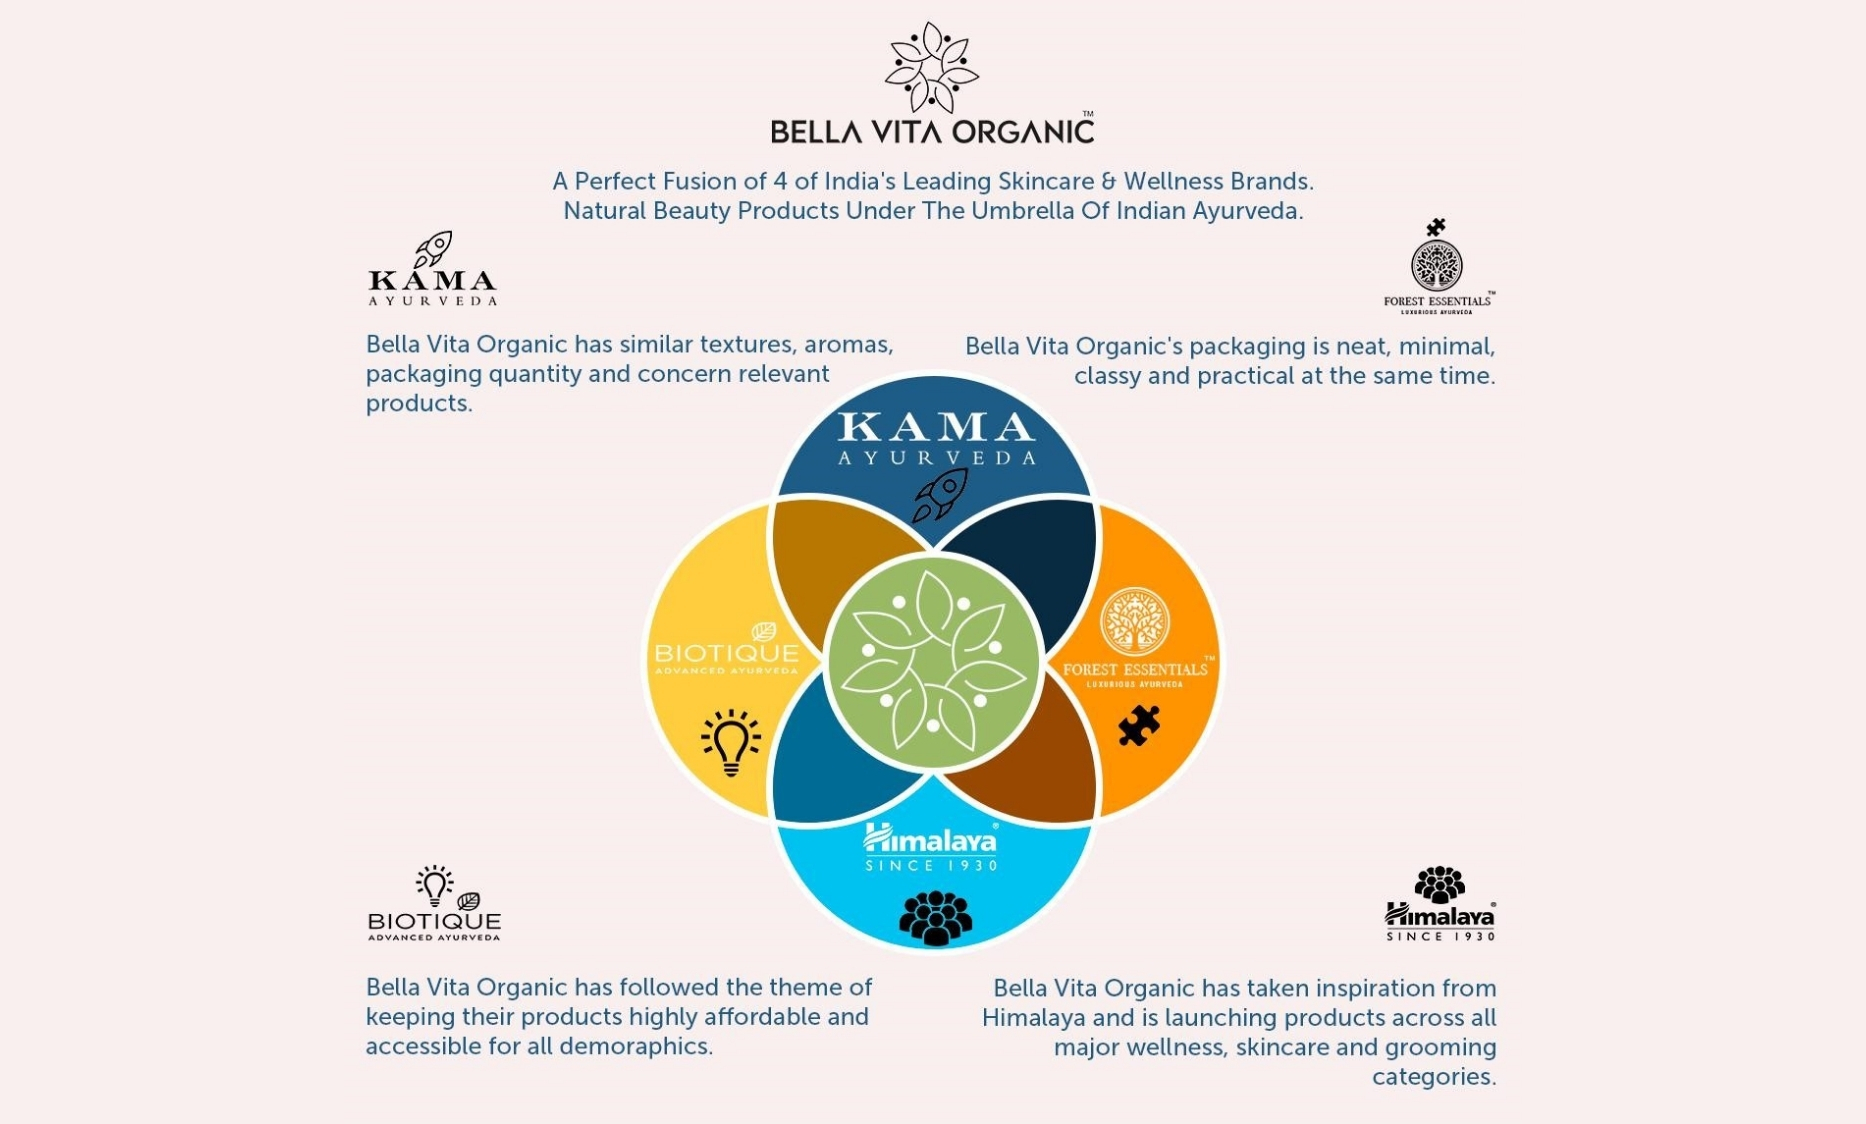 Bella Vita Organic - A Perfect Fusion Of 4 Leading Skincare & Wellness Brands in India - Digpu News